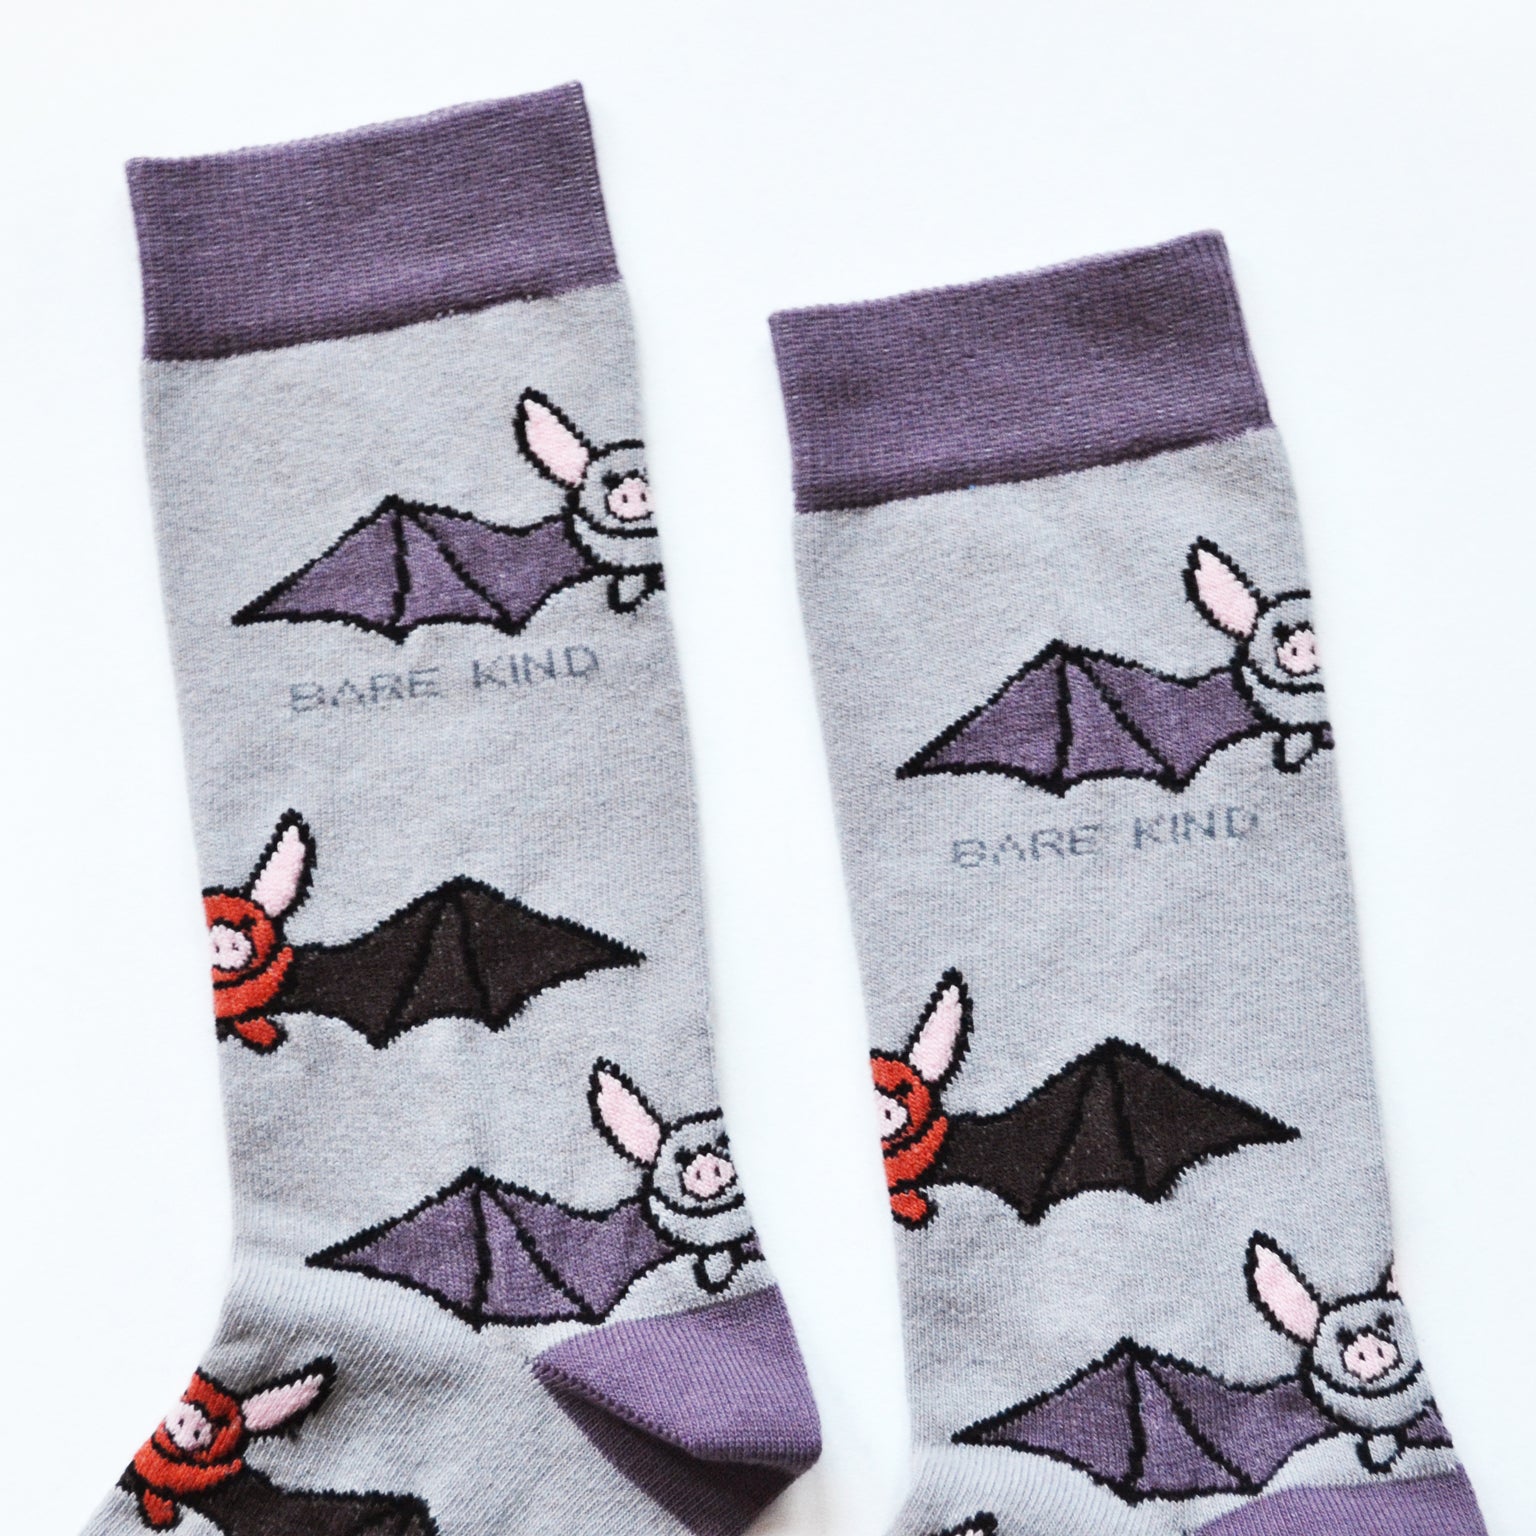 Bare Kind Bamboo Socks Adult - Bats